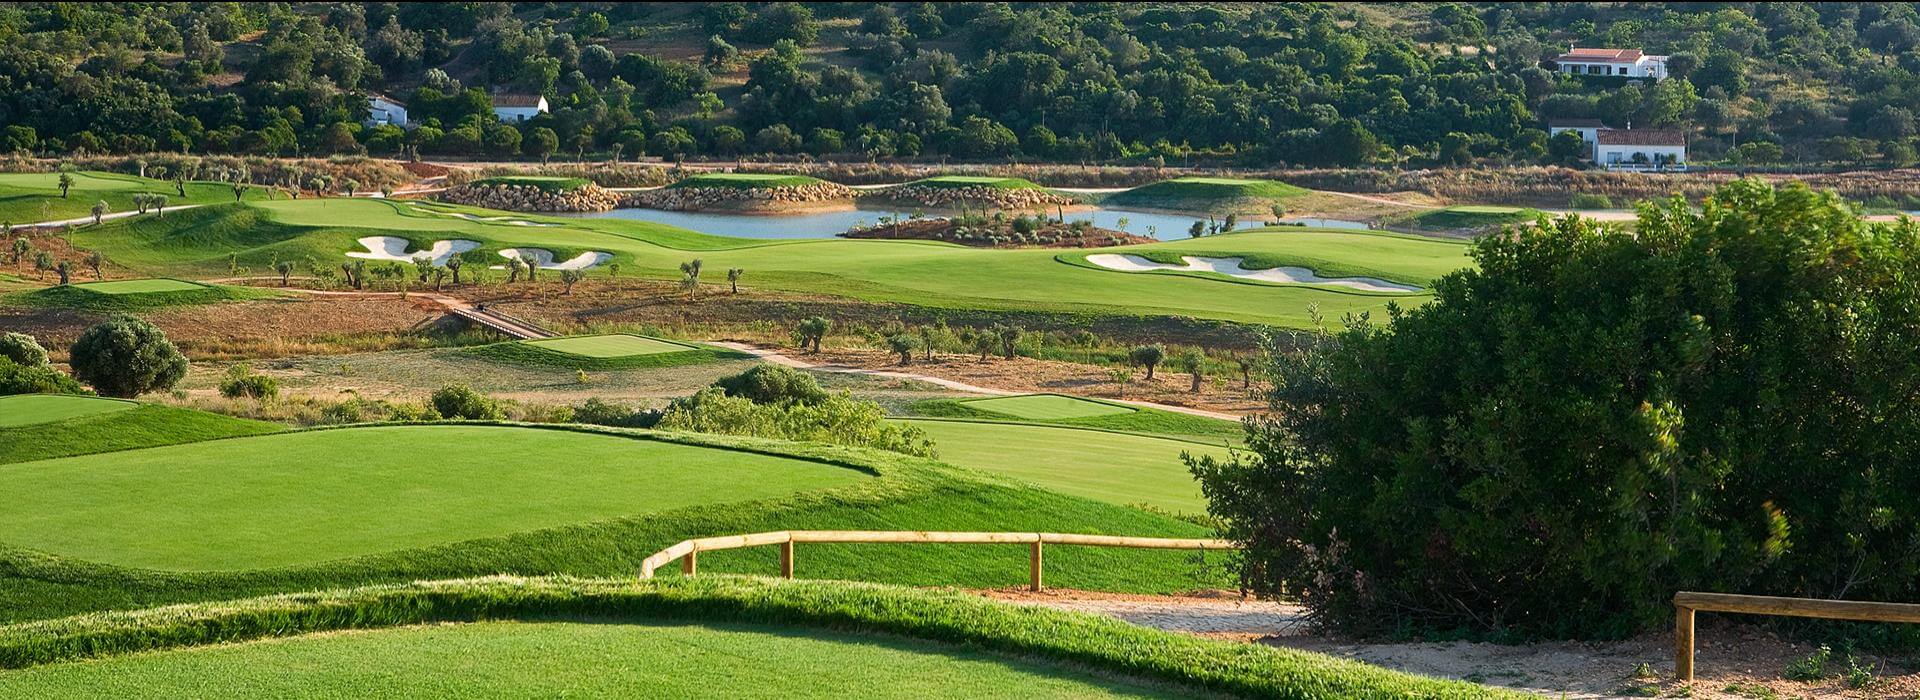 Amendoeira Faldo Golf Course elevated green